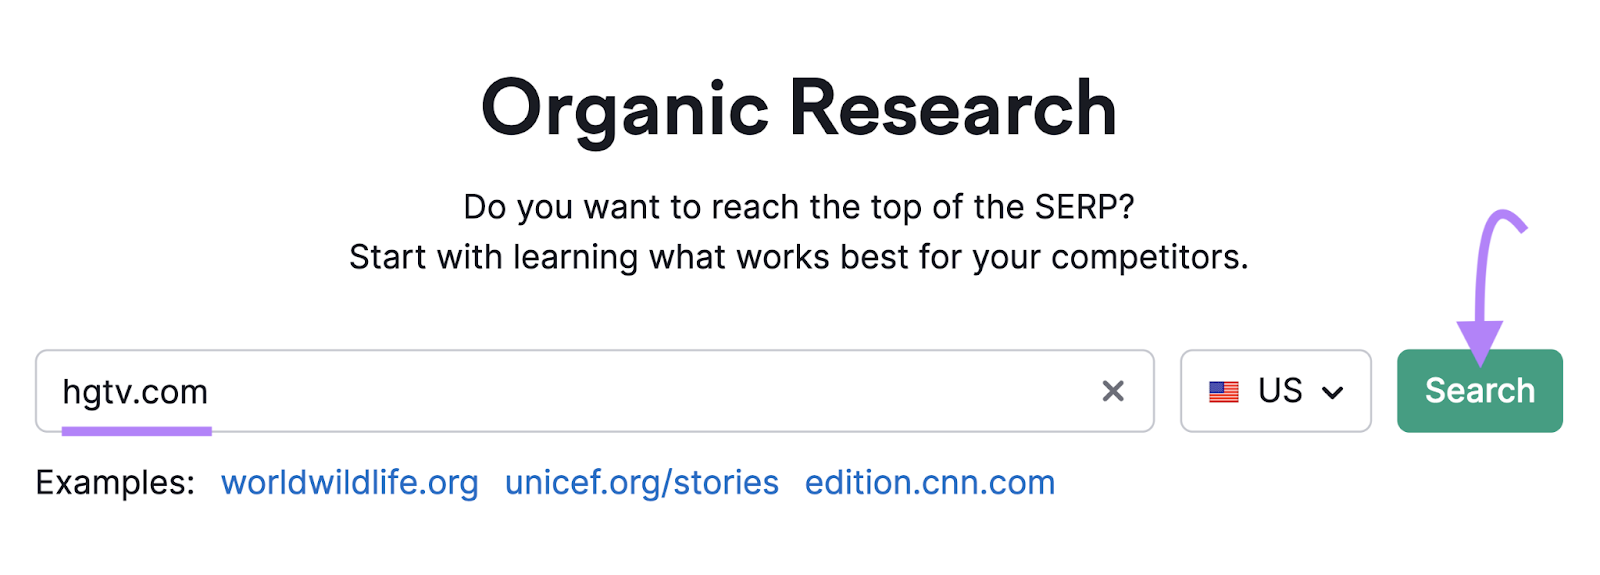 "hgtv.com" entered into Organic Research search bar